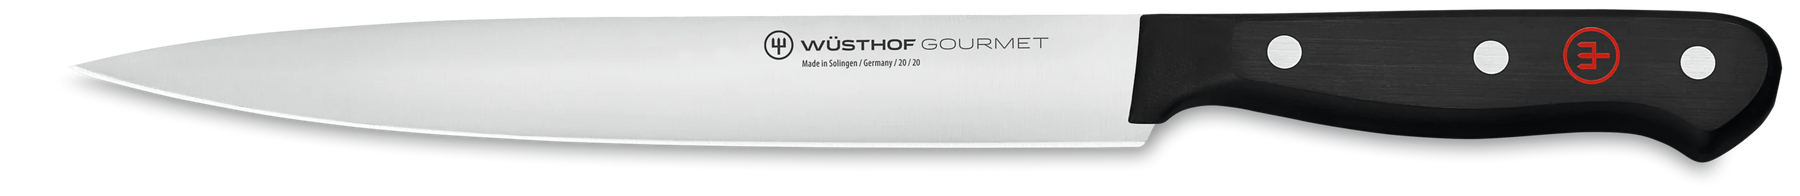 Wusthof Gourmet 8" Carving Knife